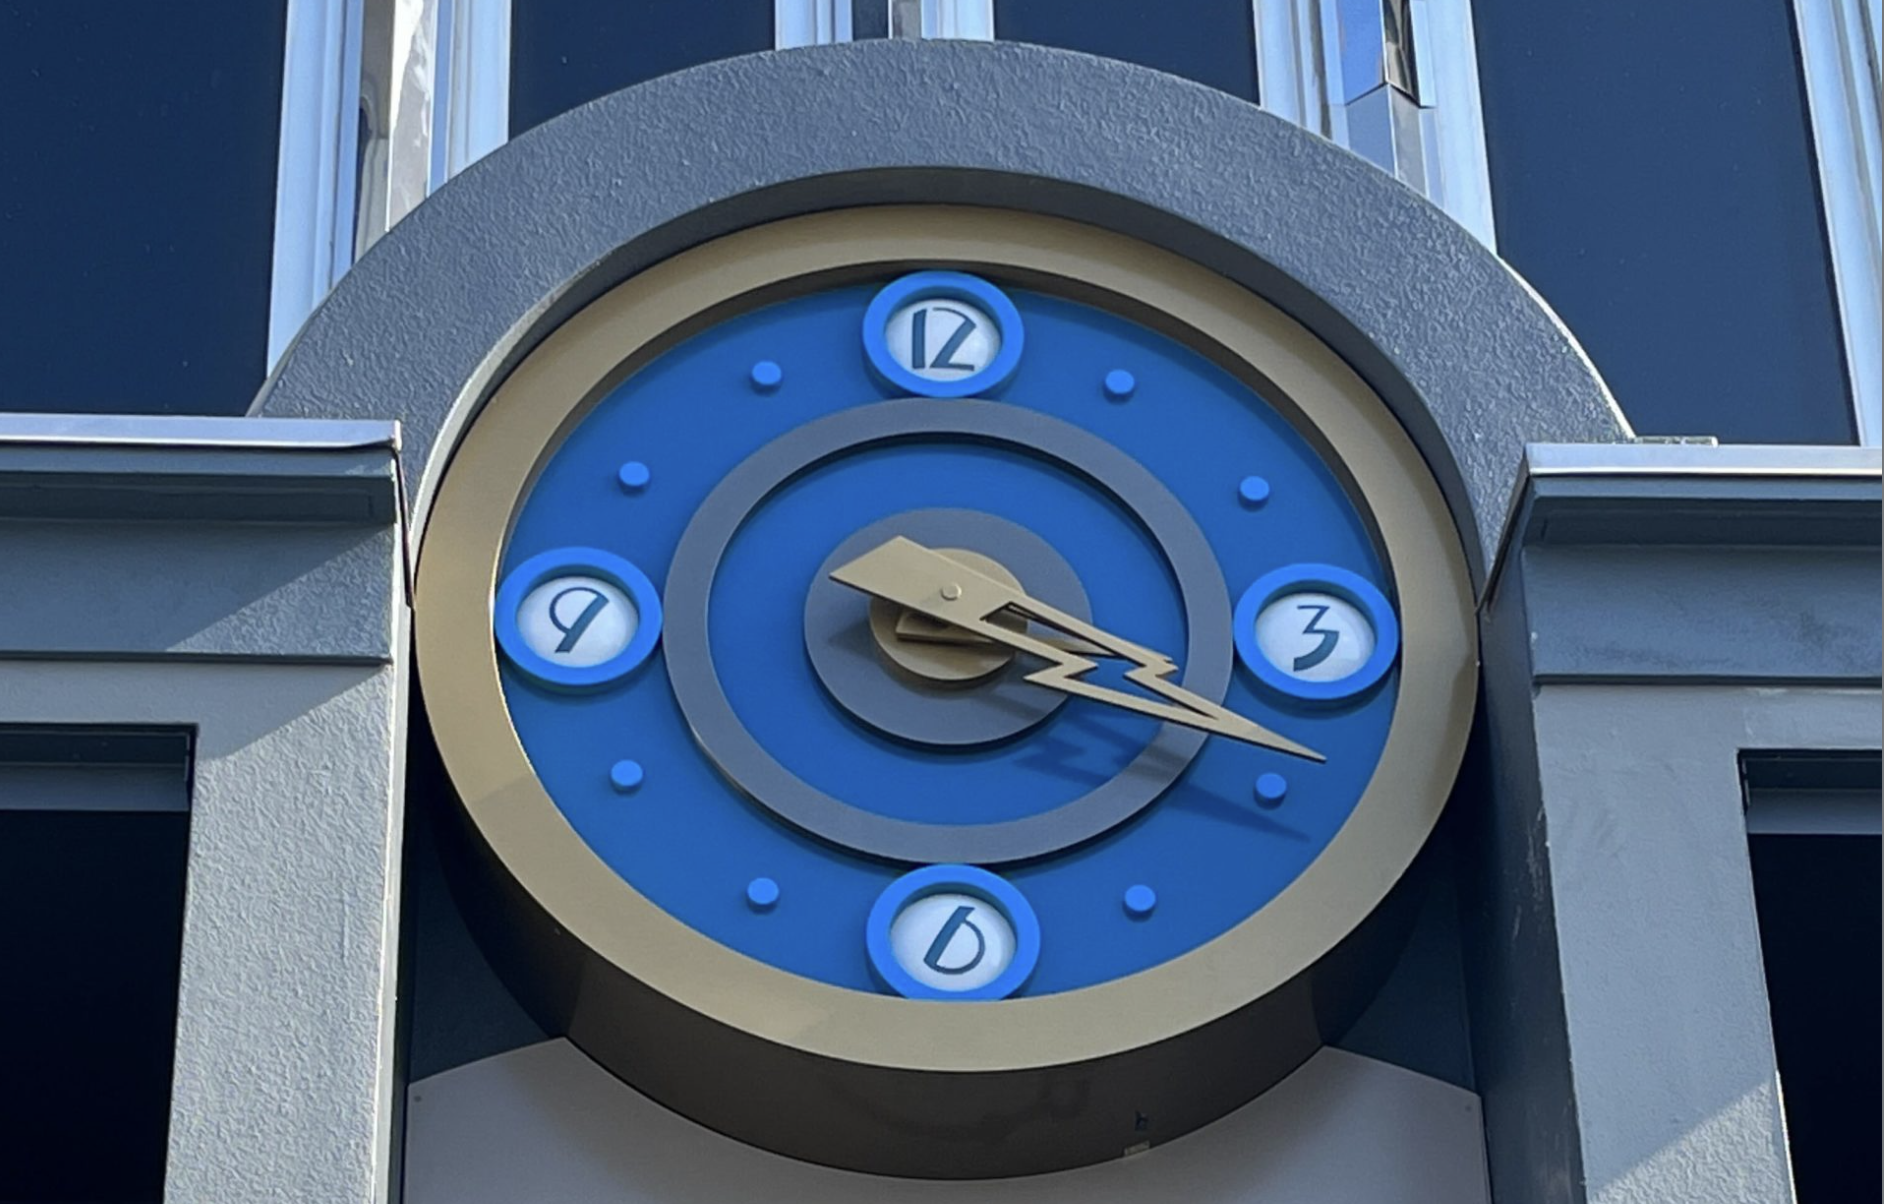 Tomorrowland Launch Depot clock